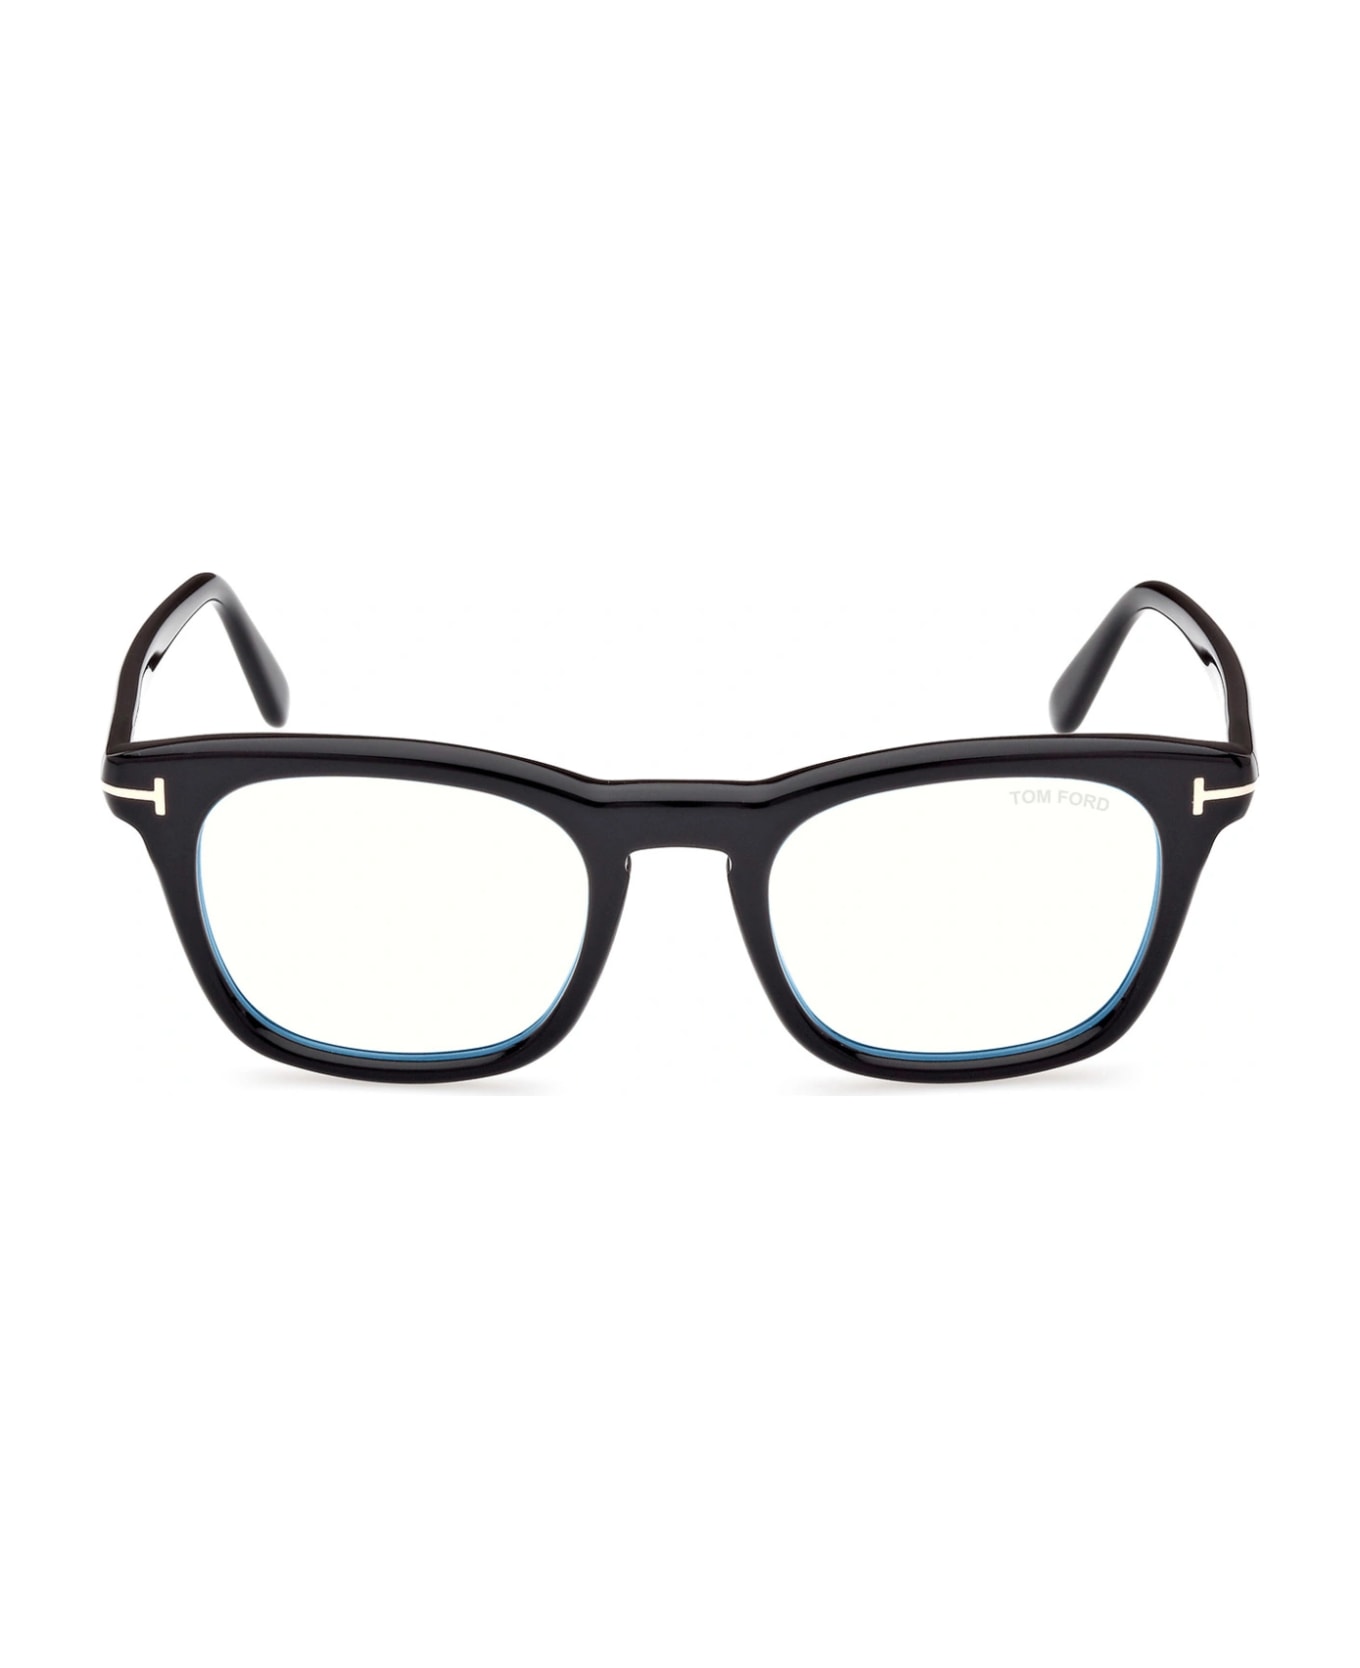 Tom Ford Eyewear TF5870 001 Glasses